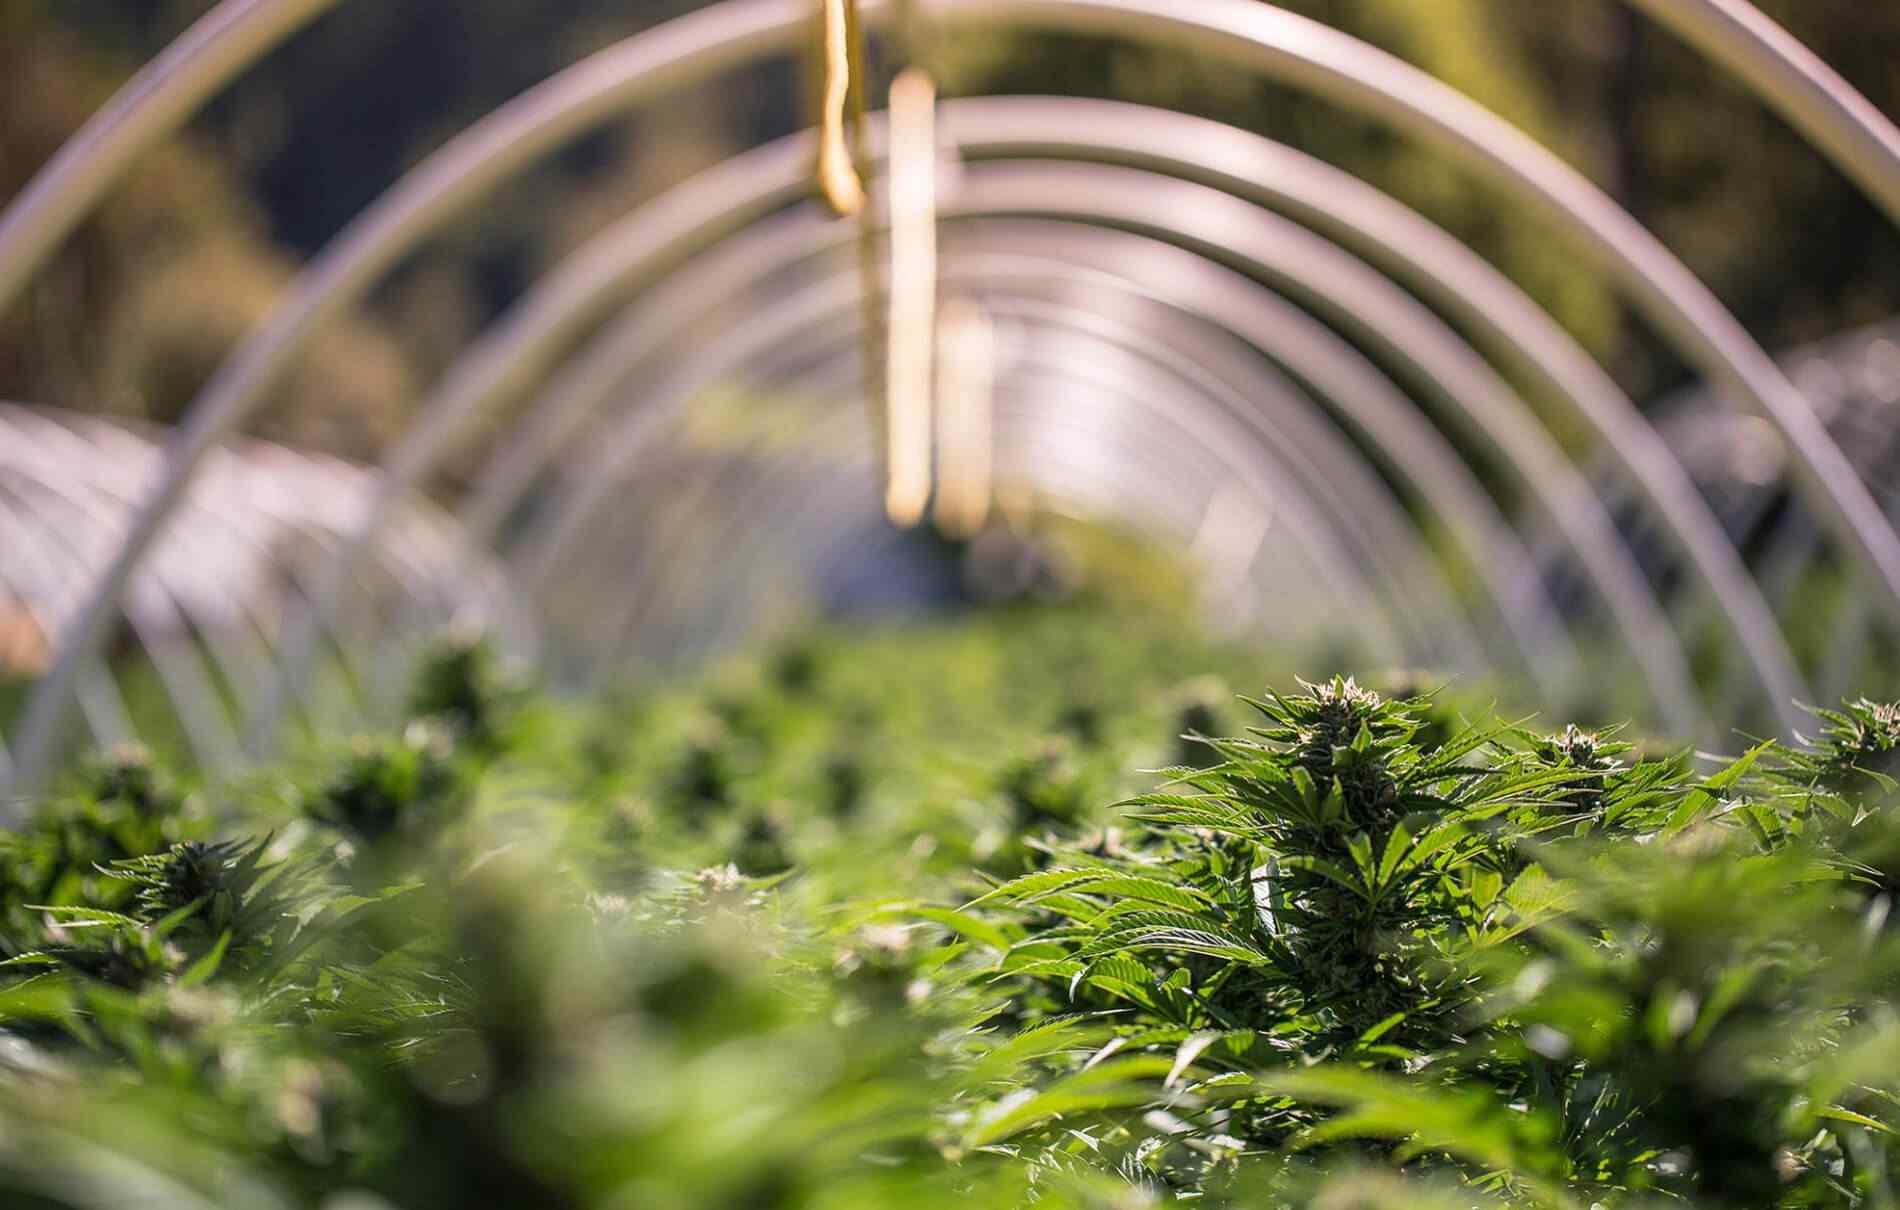 Cannabis plantation